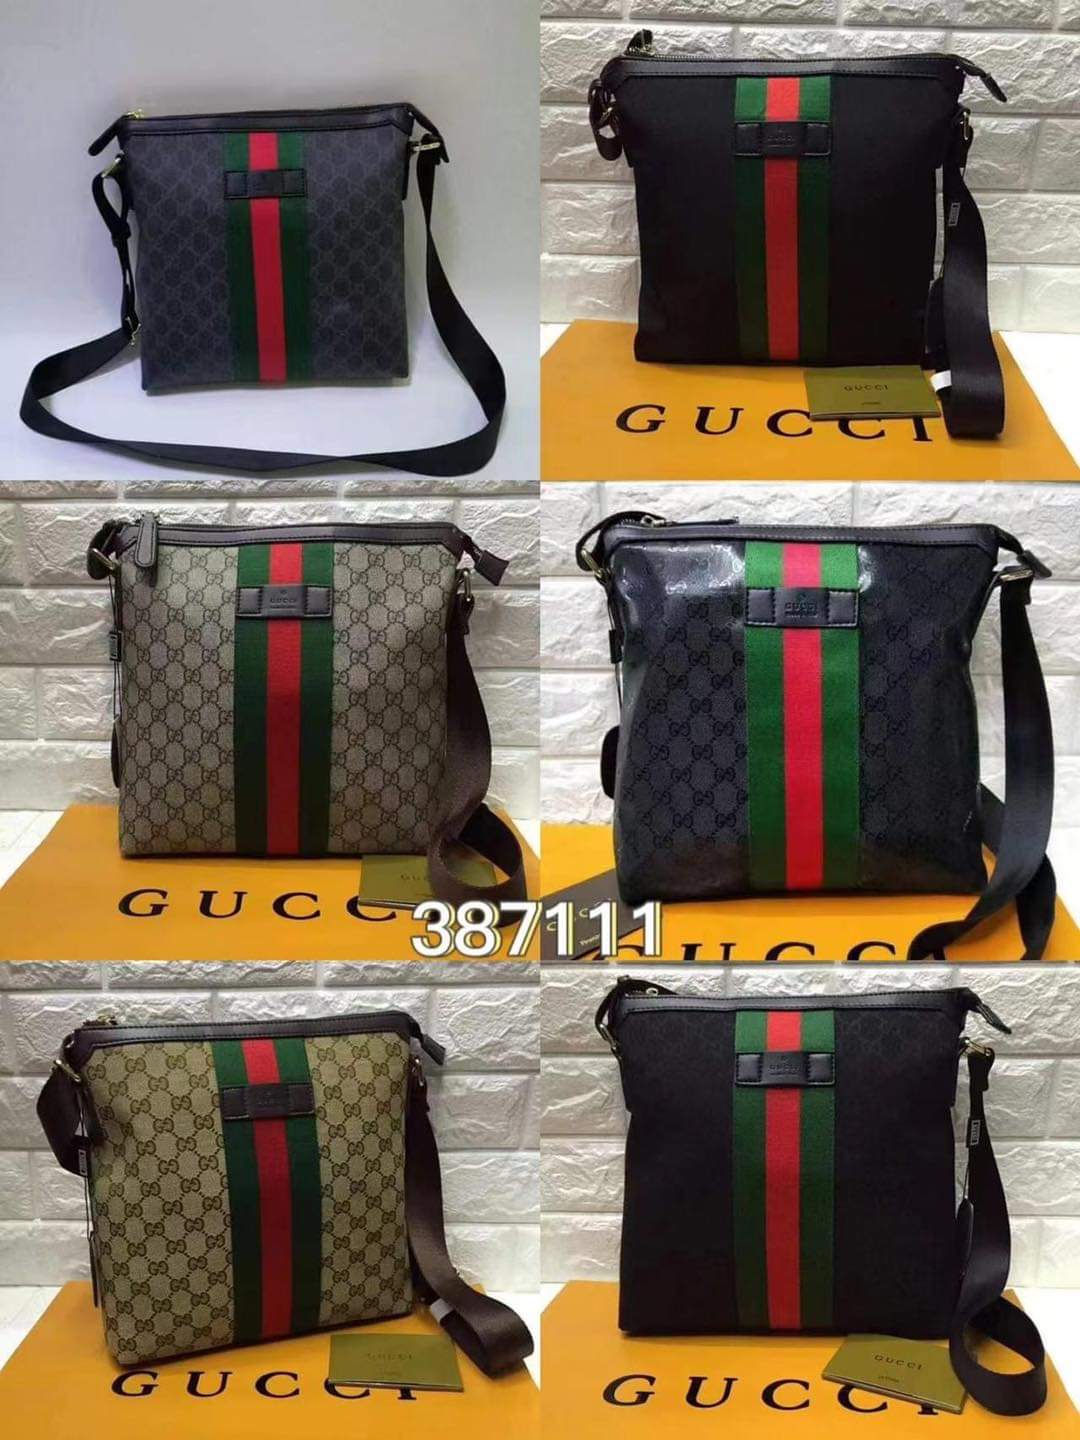 Gucci Messenger Bag with Dustbag - Unisex (Actual Photos)